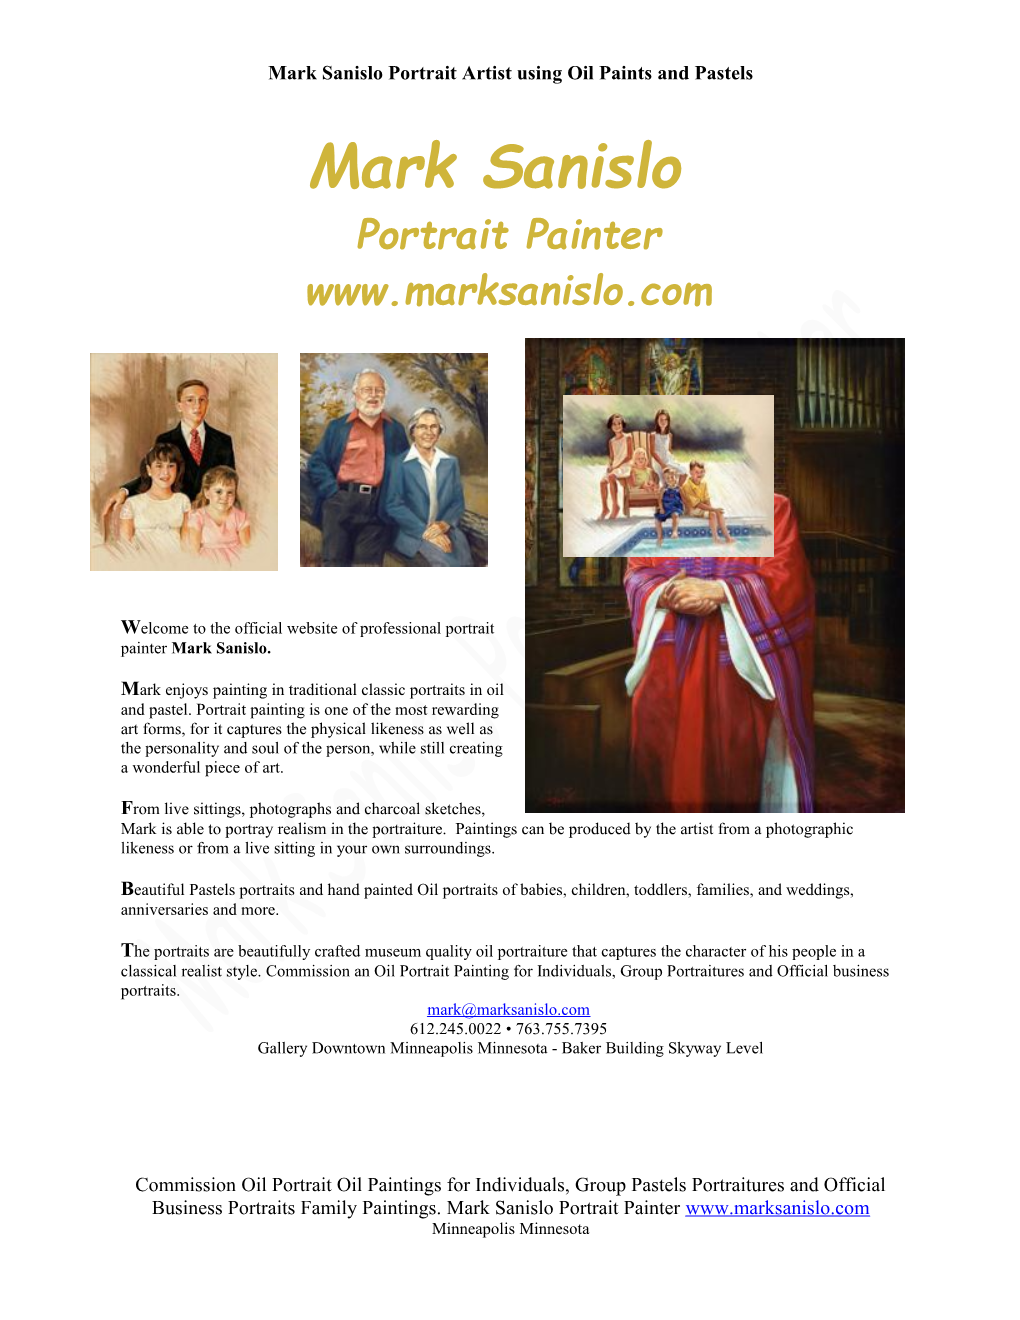 Mark Sanislo Portrait Painter